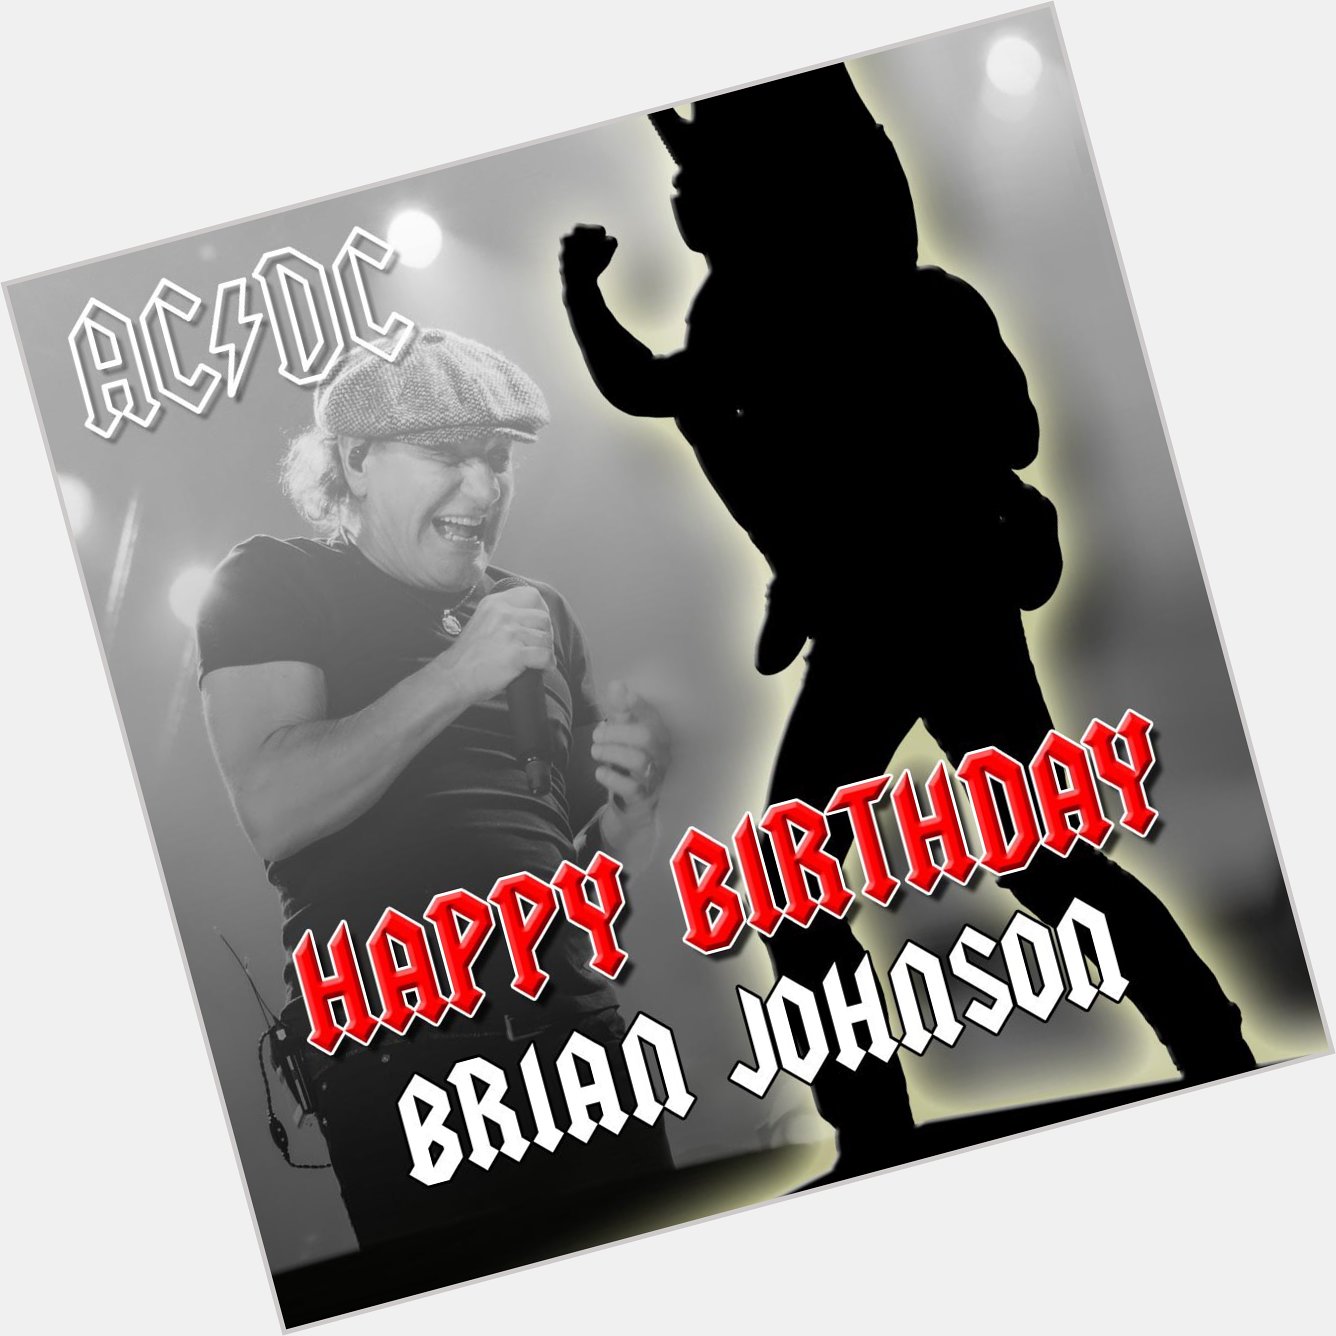 Happy Birthday Brian Johnson!   